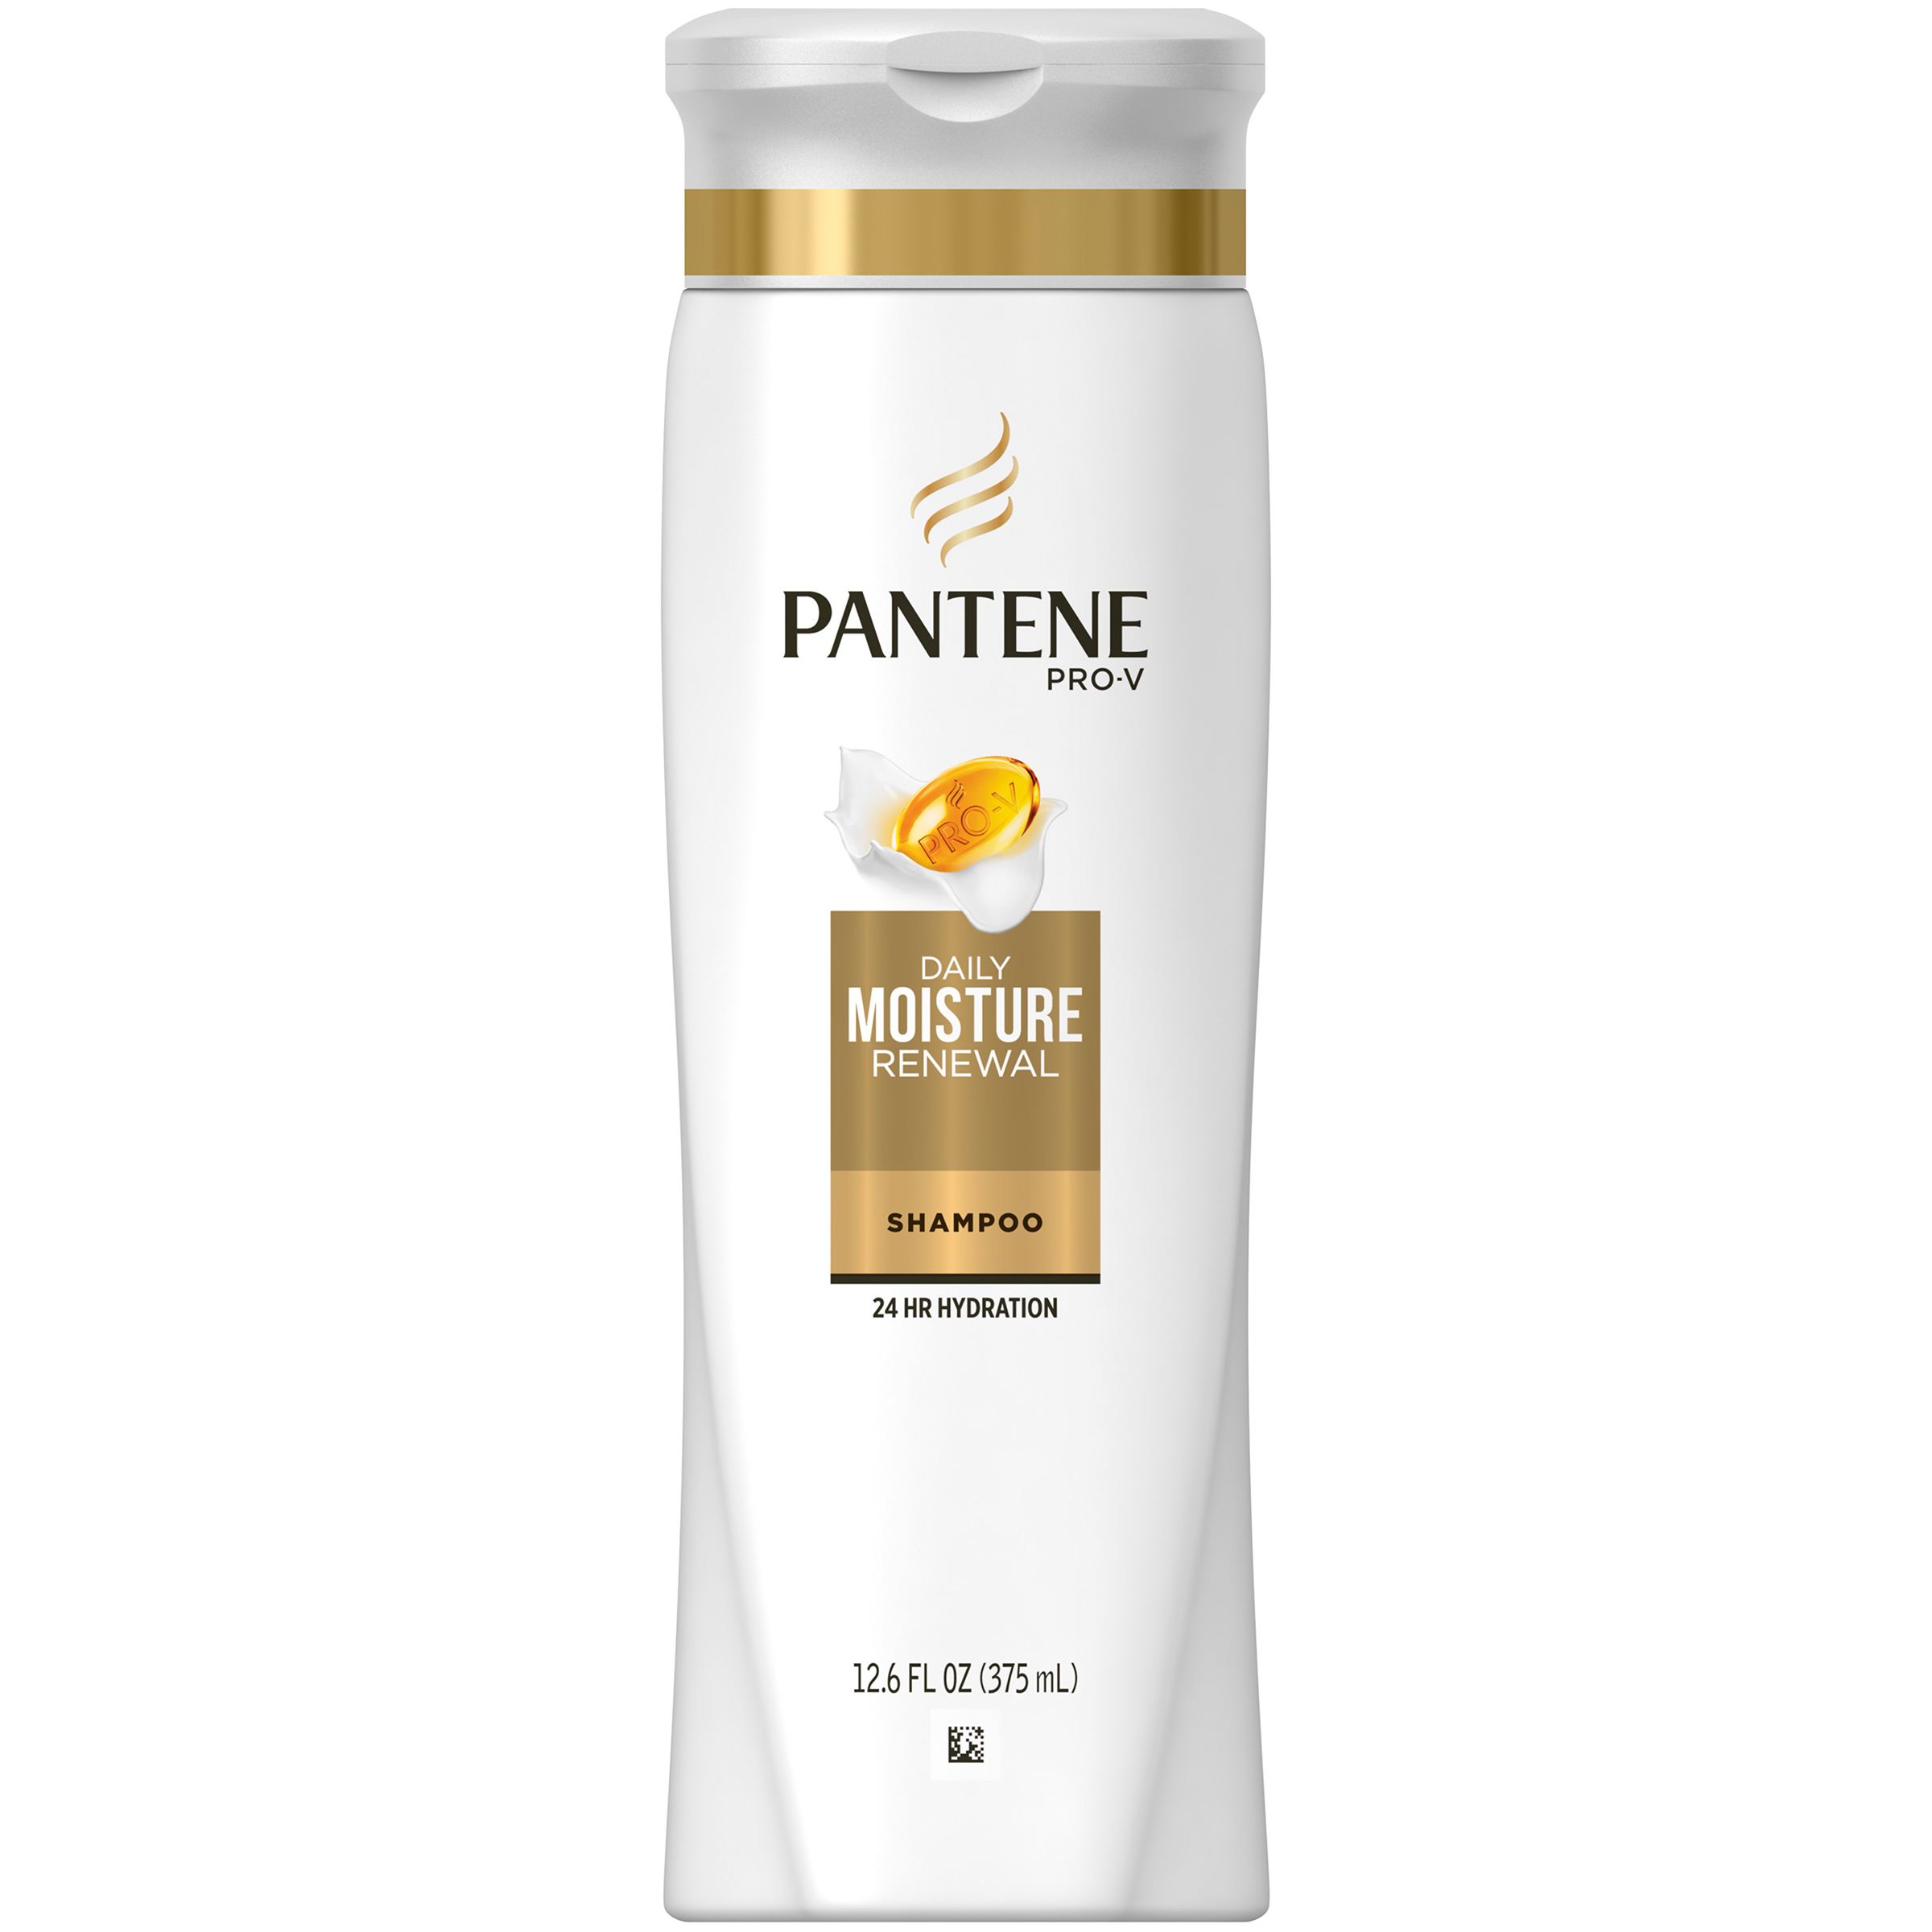 Pantene Pro-V Shampoo, Moisture Renewal, Daily, 12.6 fl oz (375 ml)